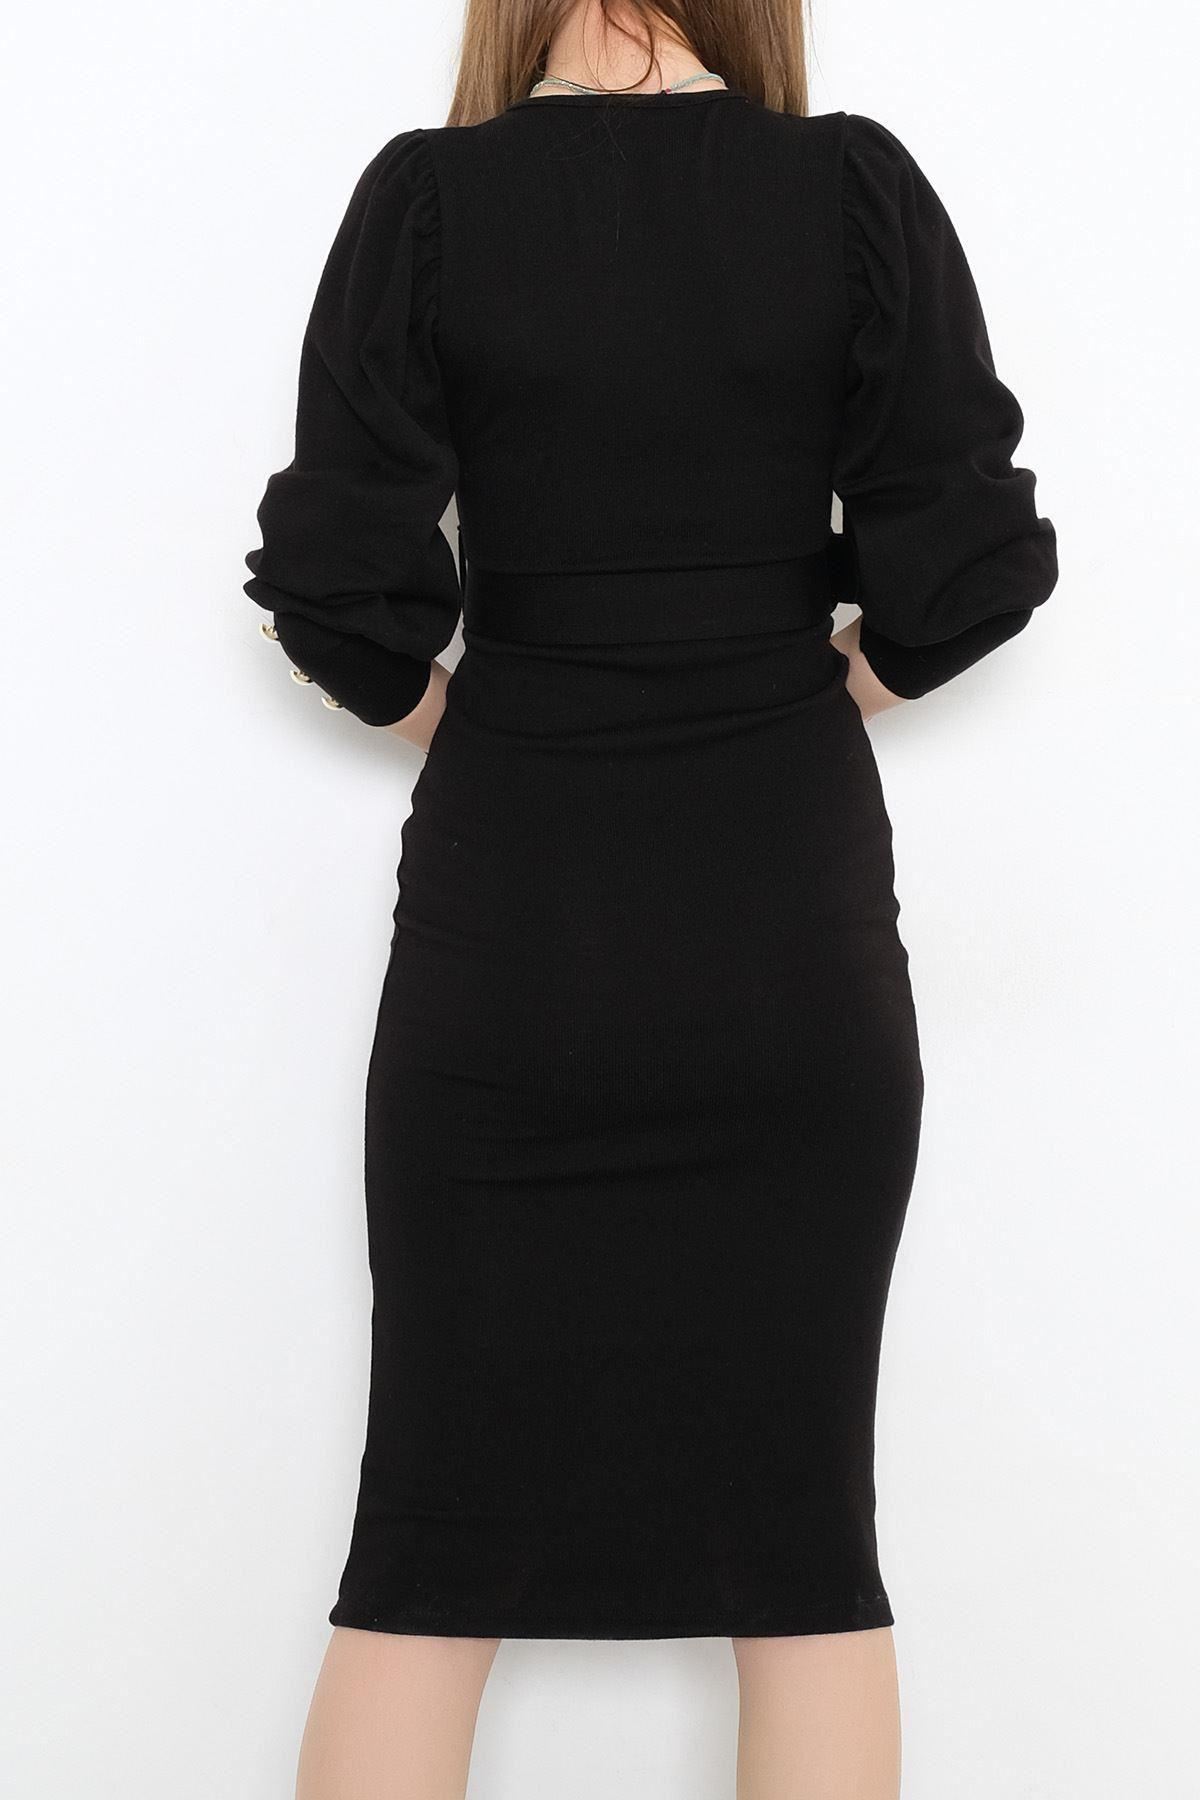 Kemerli Kruvaze Elbise Siyah - 2014.134.